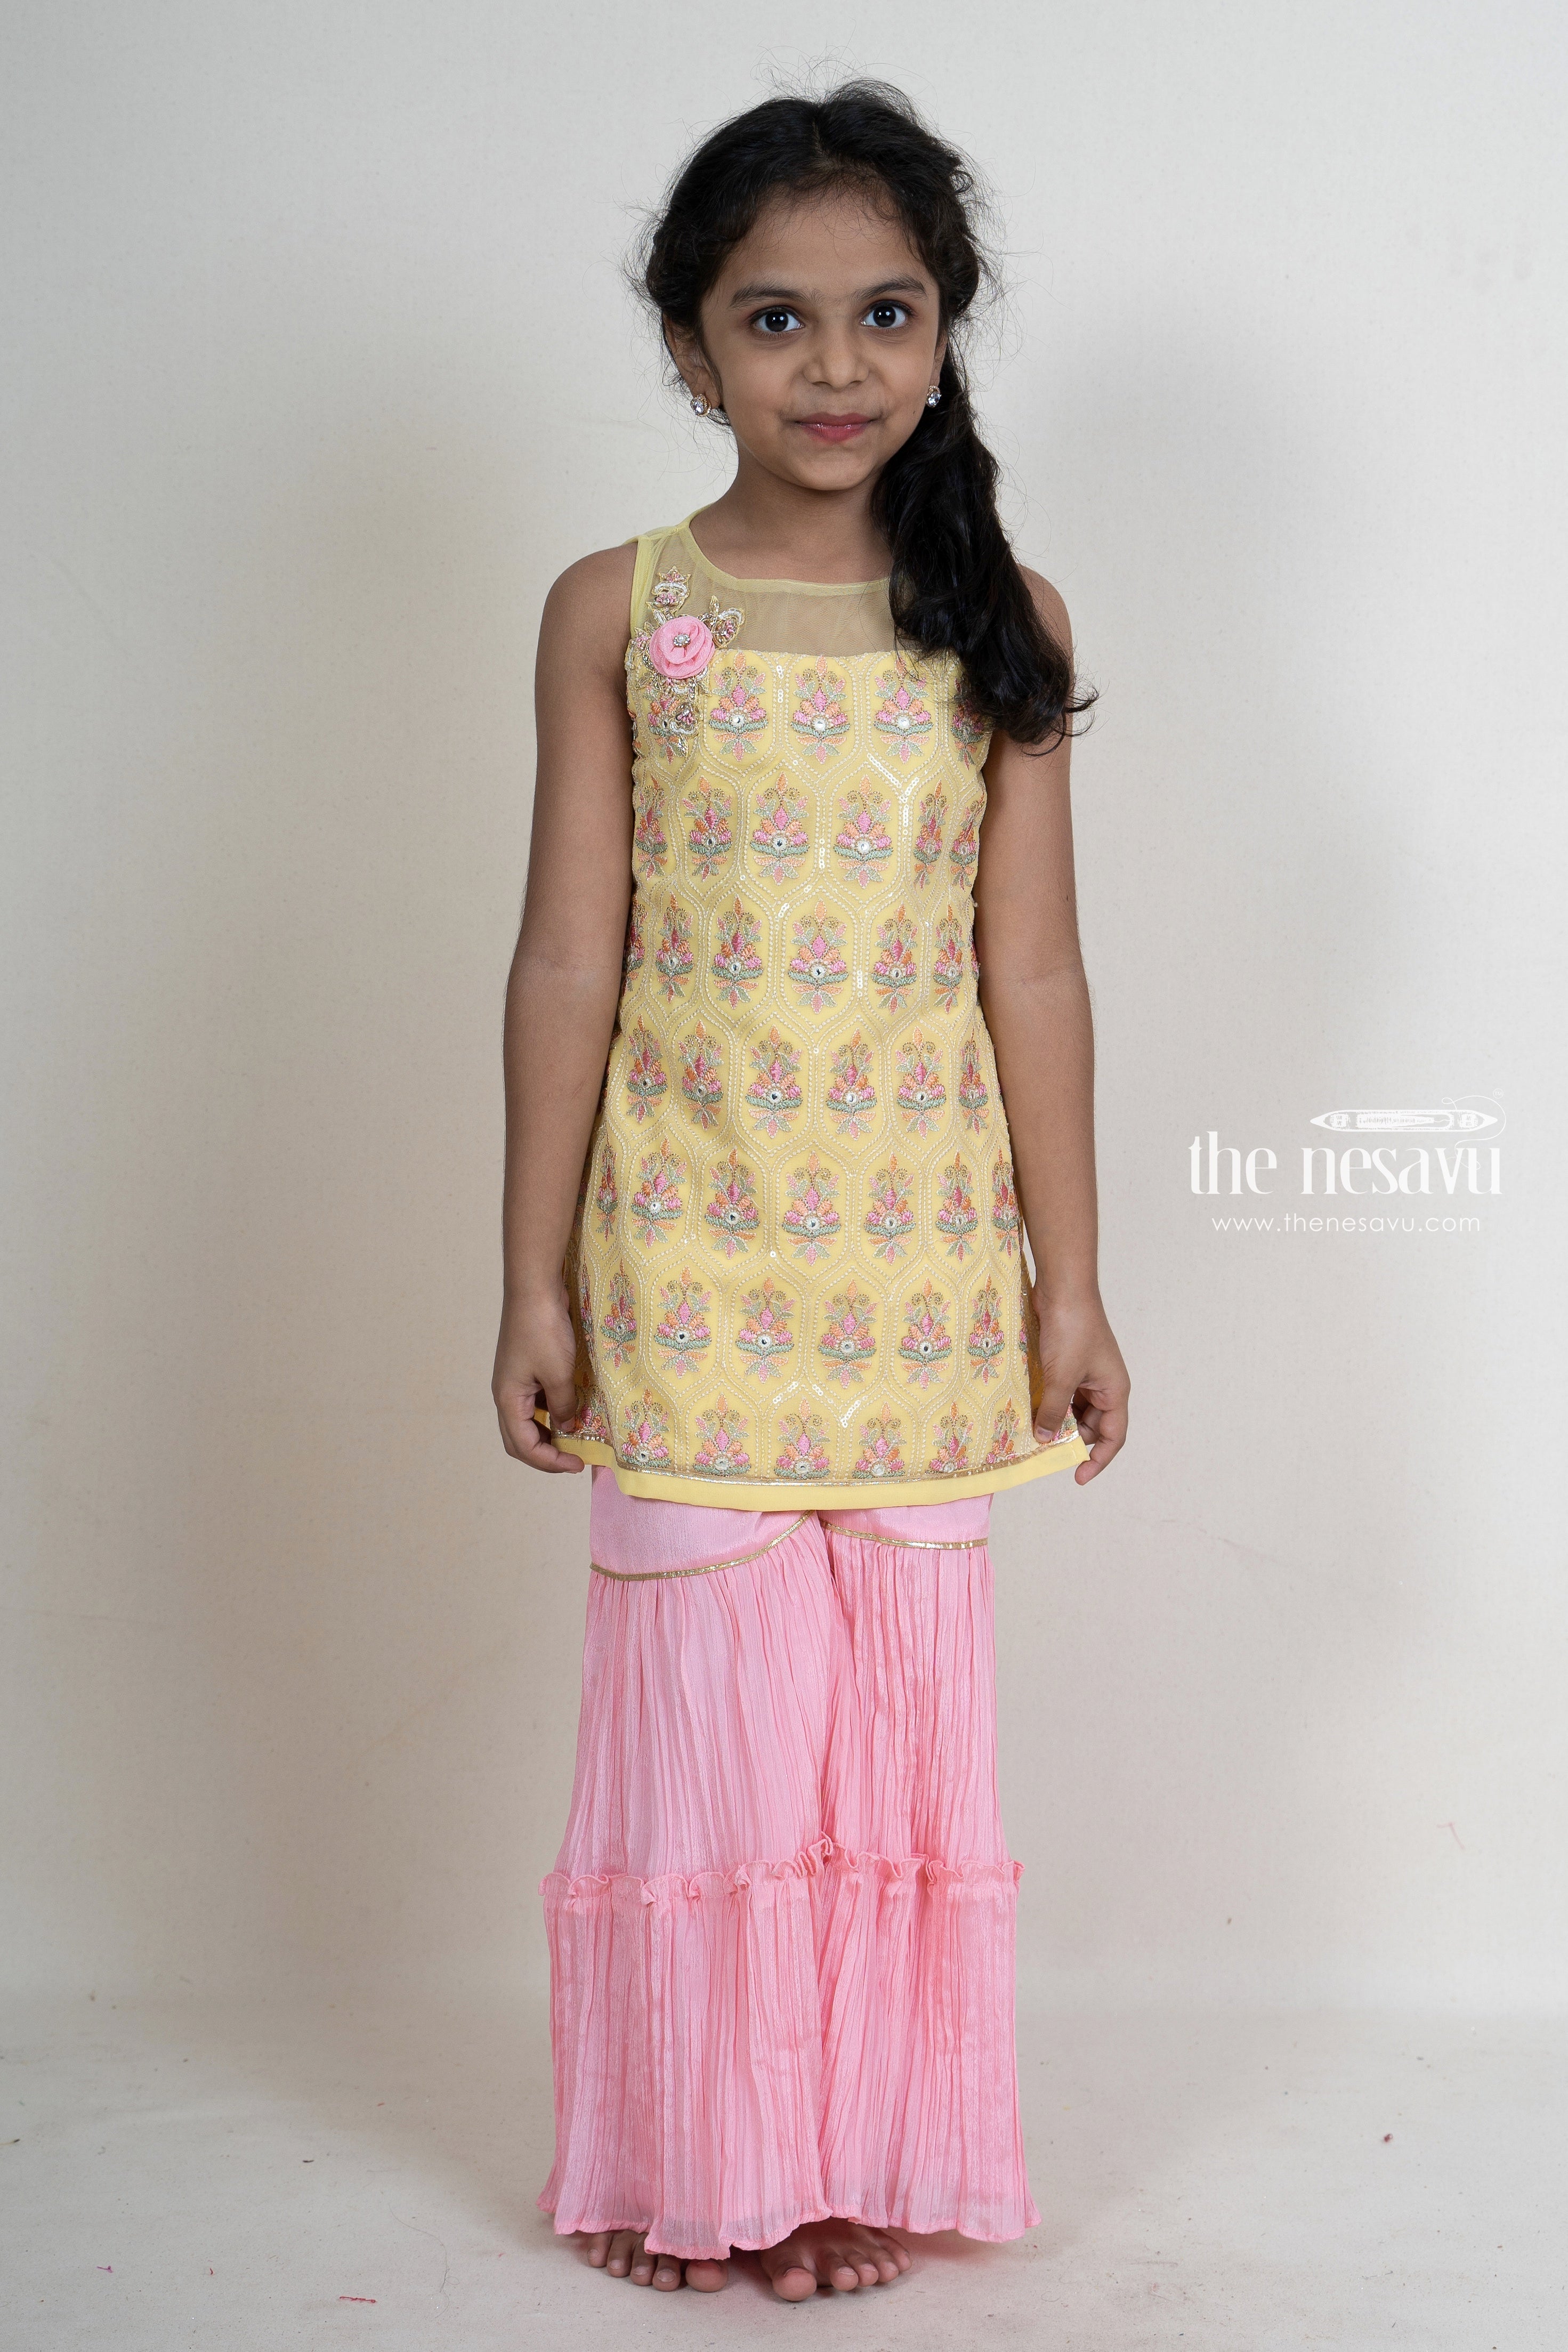 Shop Girls Designer Palazzo Suit Ideas, Latest Festive Wear For Diwali